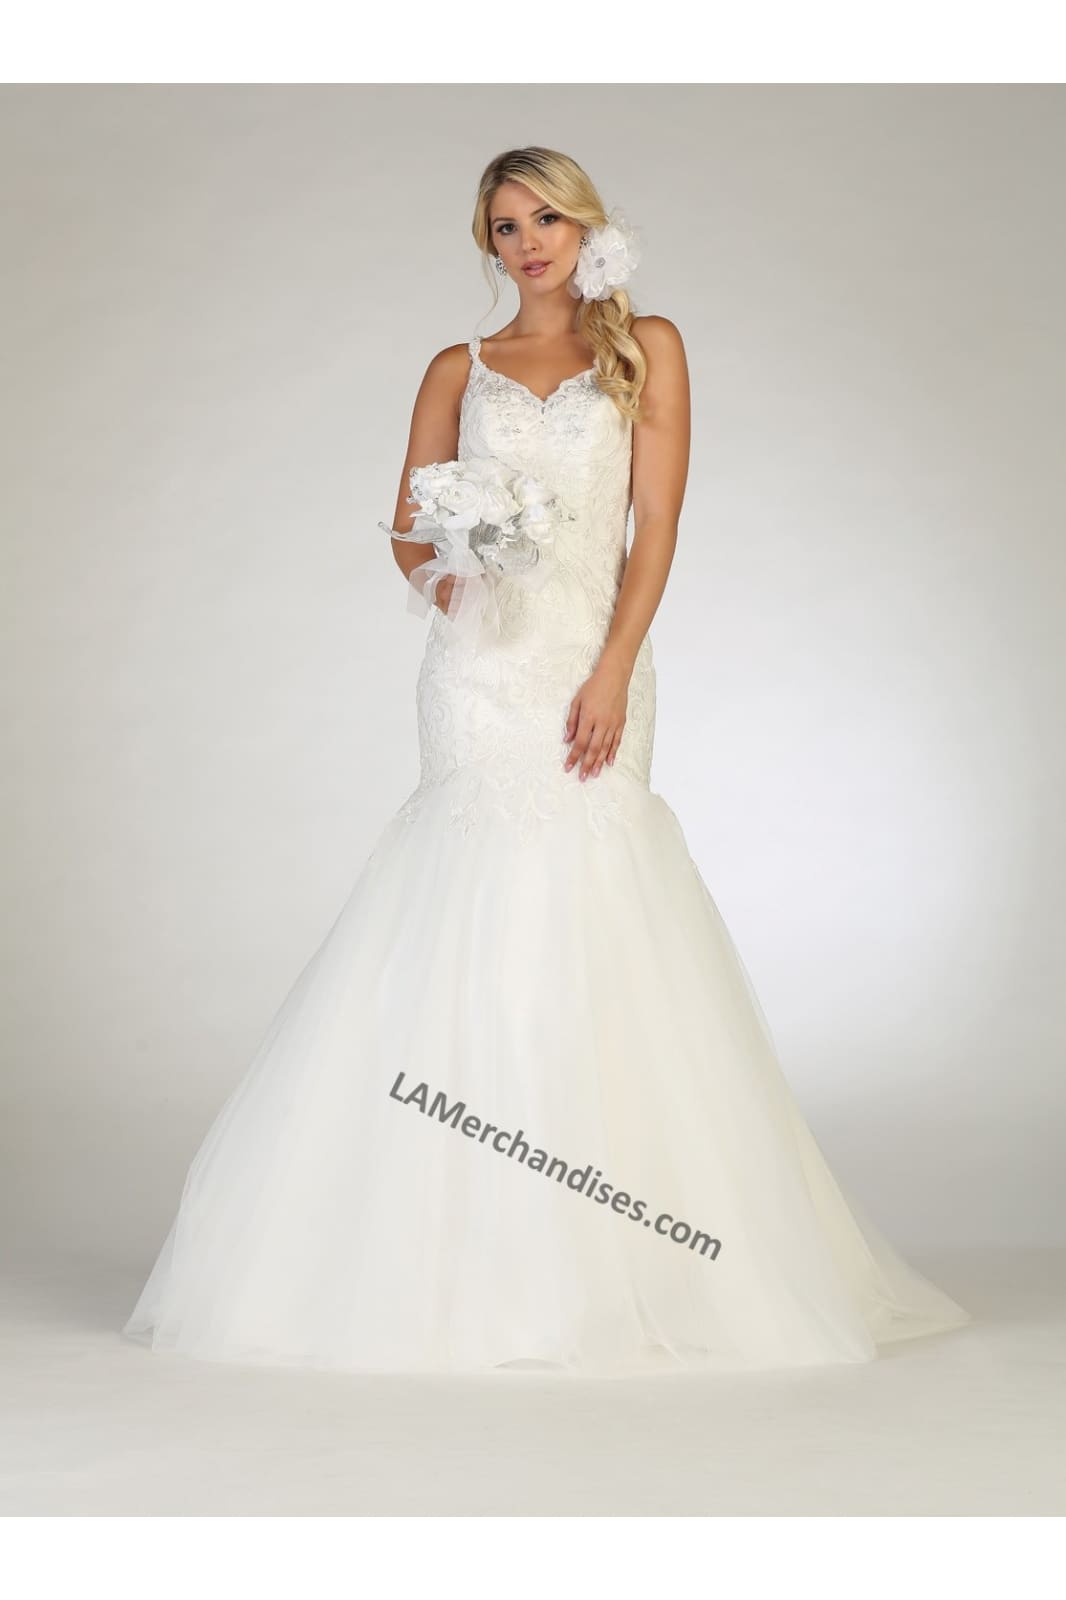 shoulder straps embroiderer & sequins bridal dress- LA7642 - Ivory - LA Merchandise